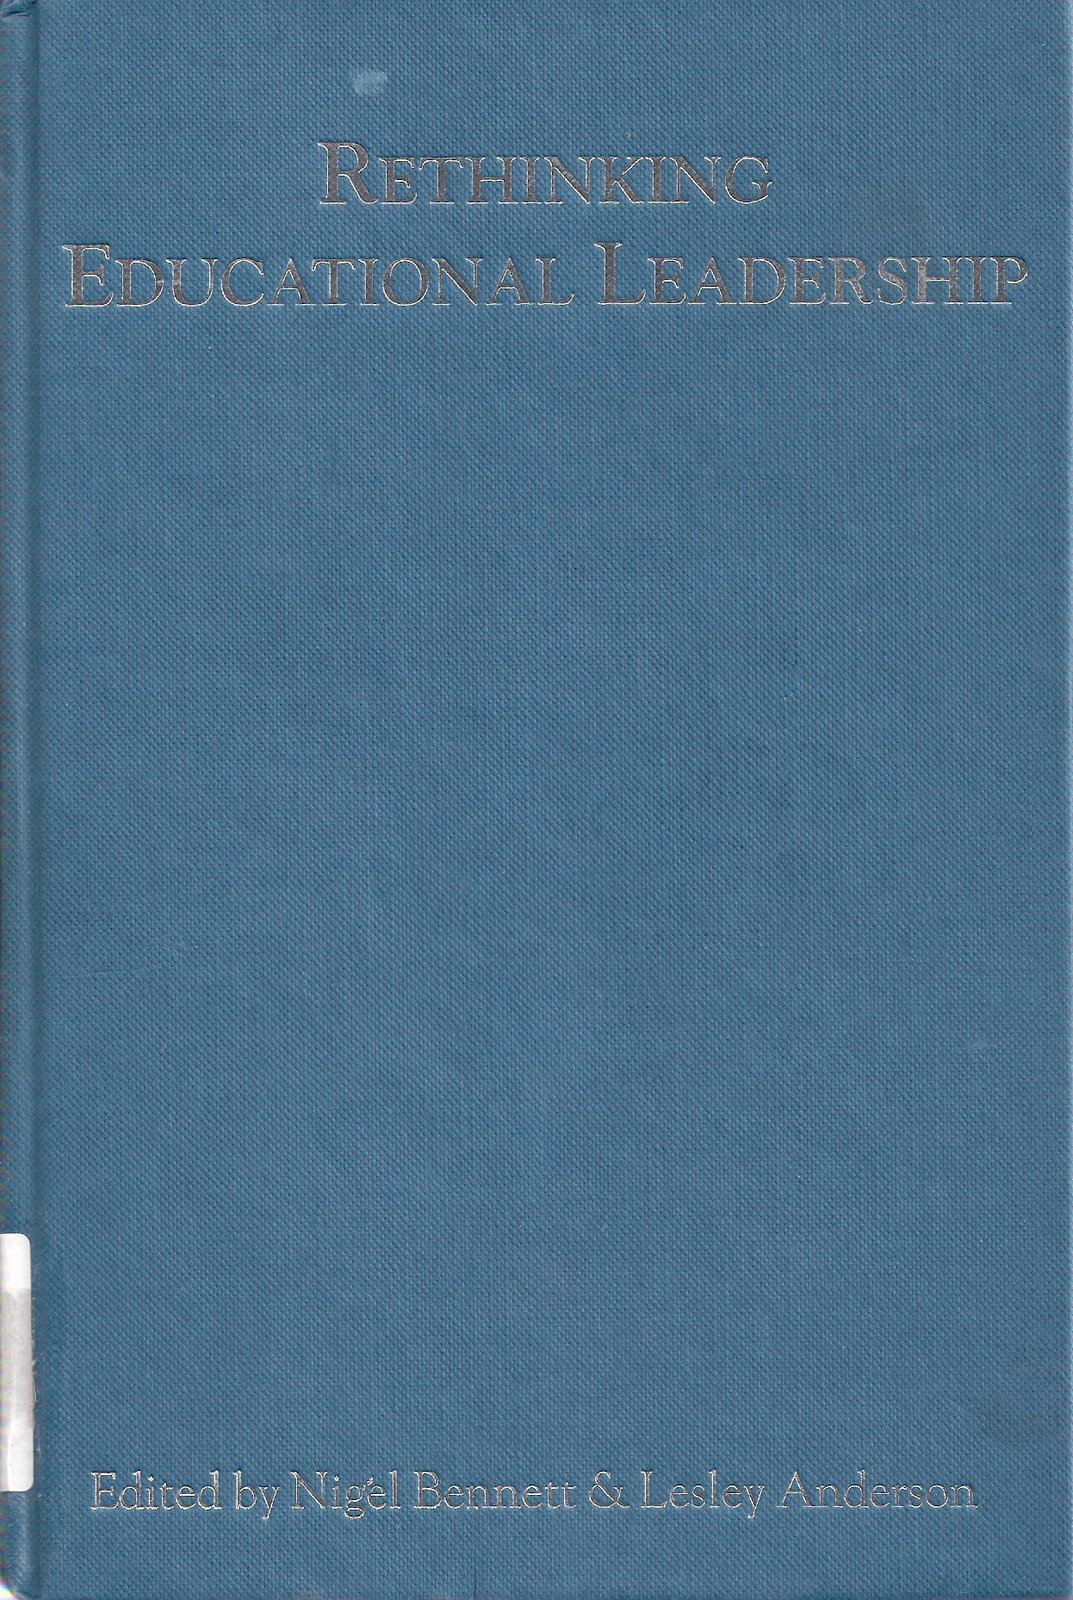 [Rethinking+educational+leadership.jpg]